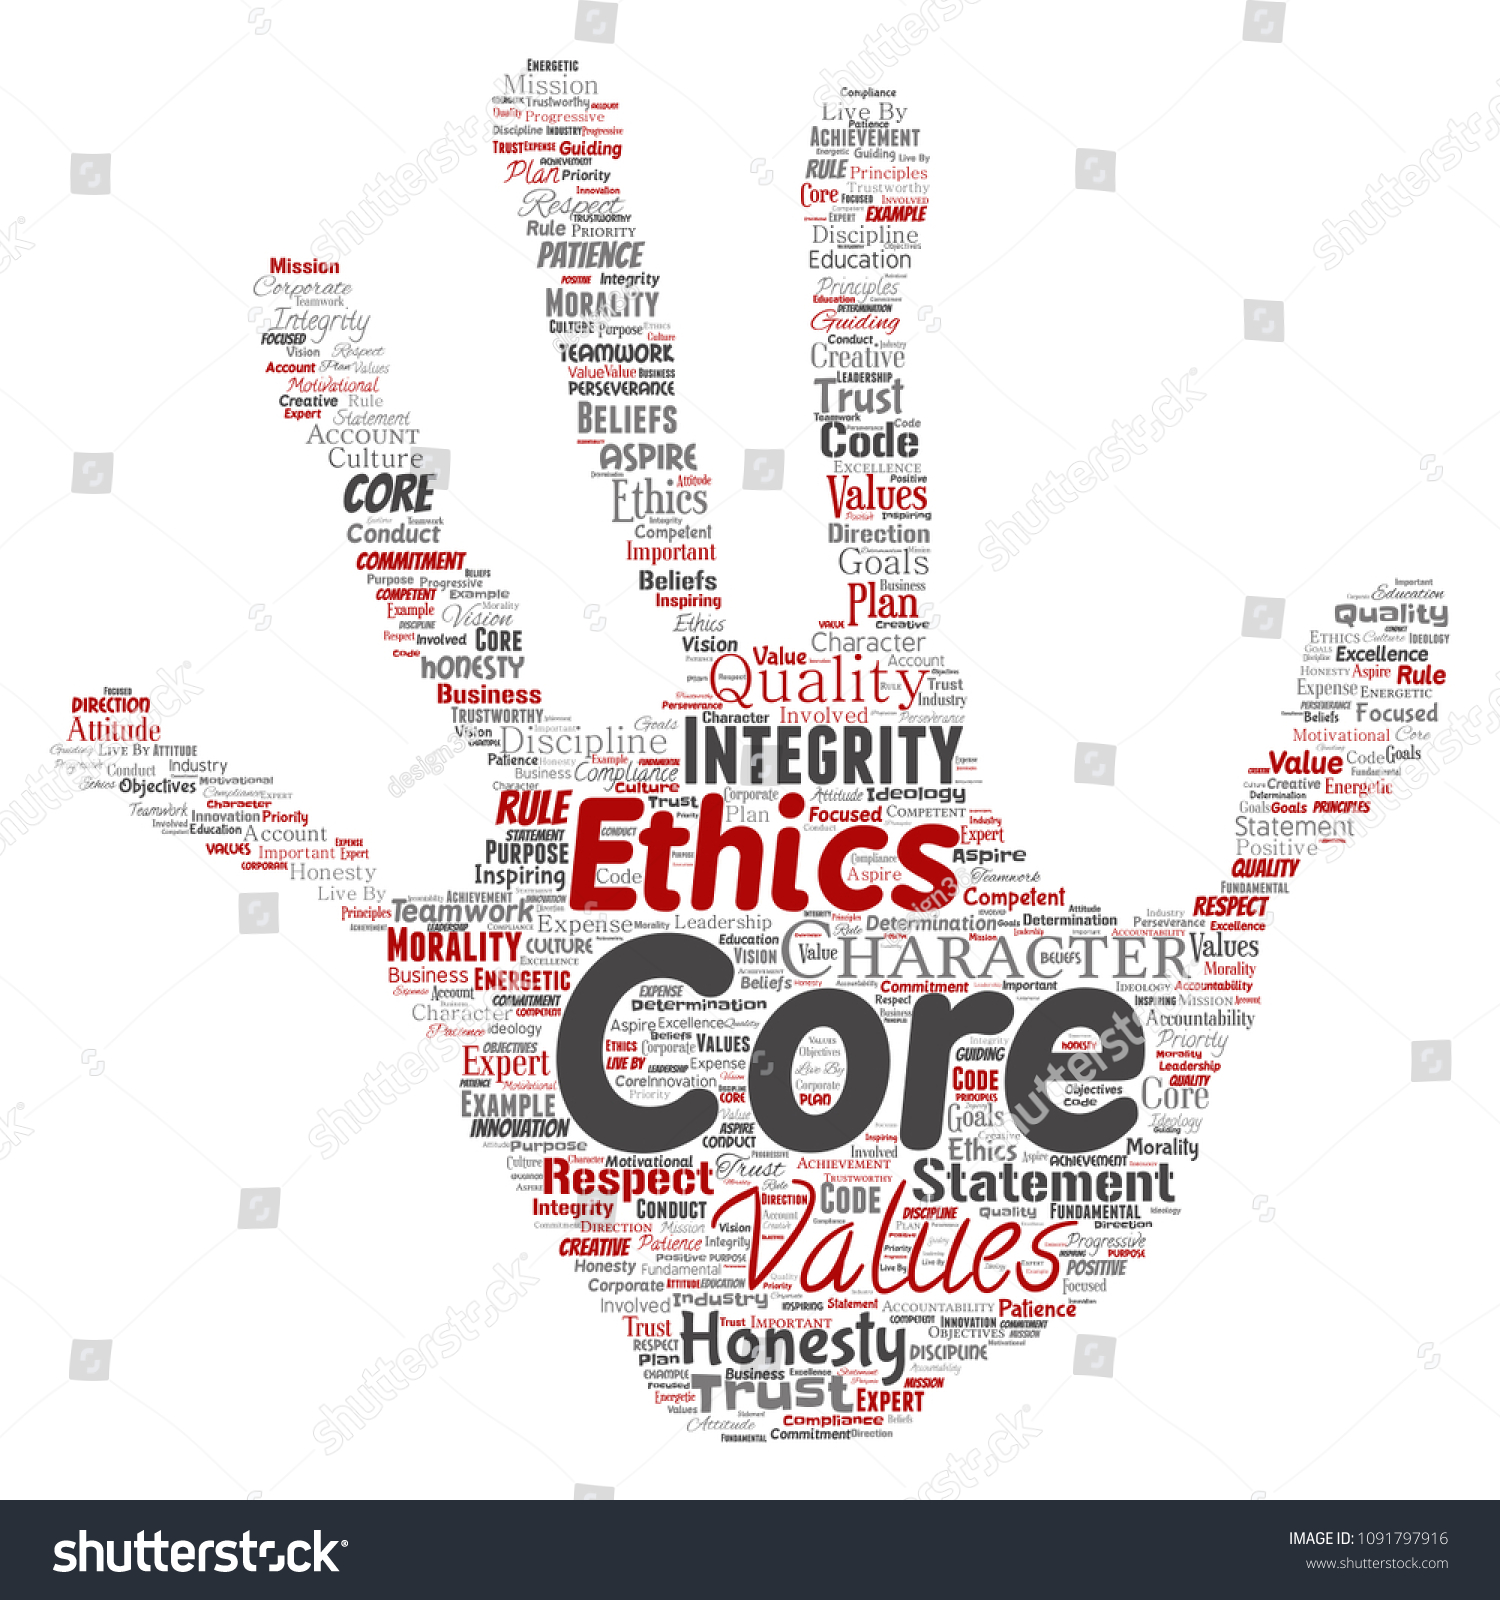 HQI - Integrity & Ethics